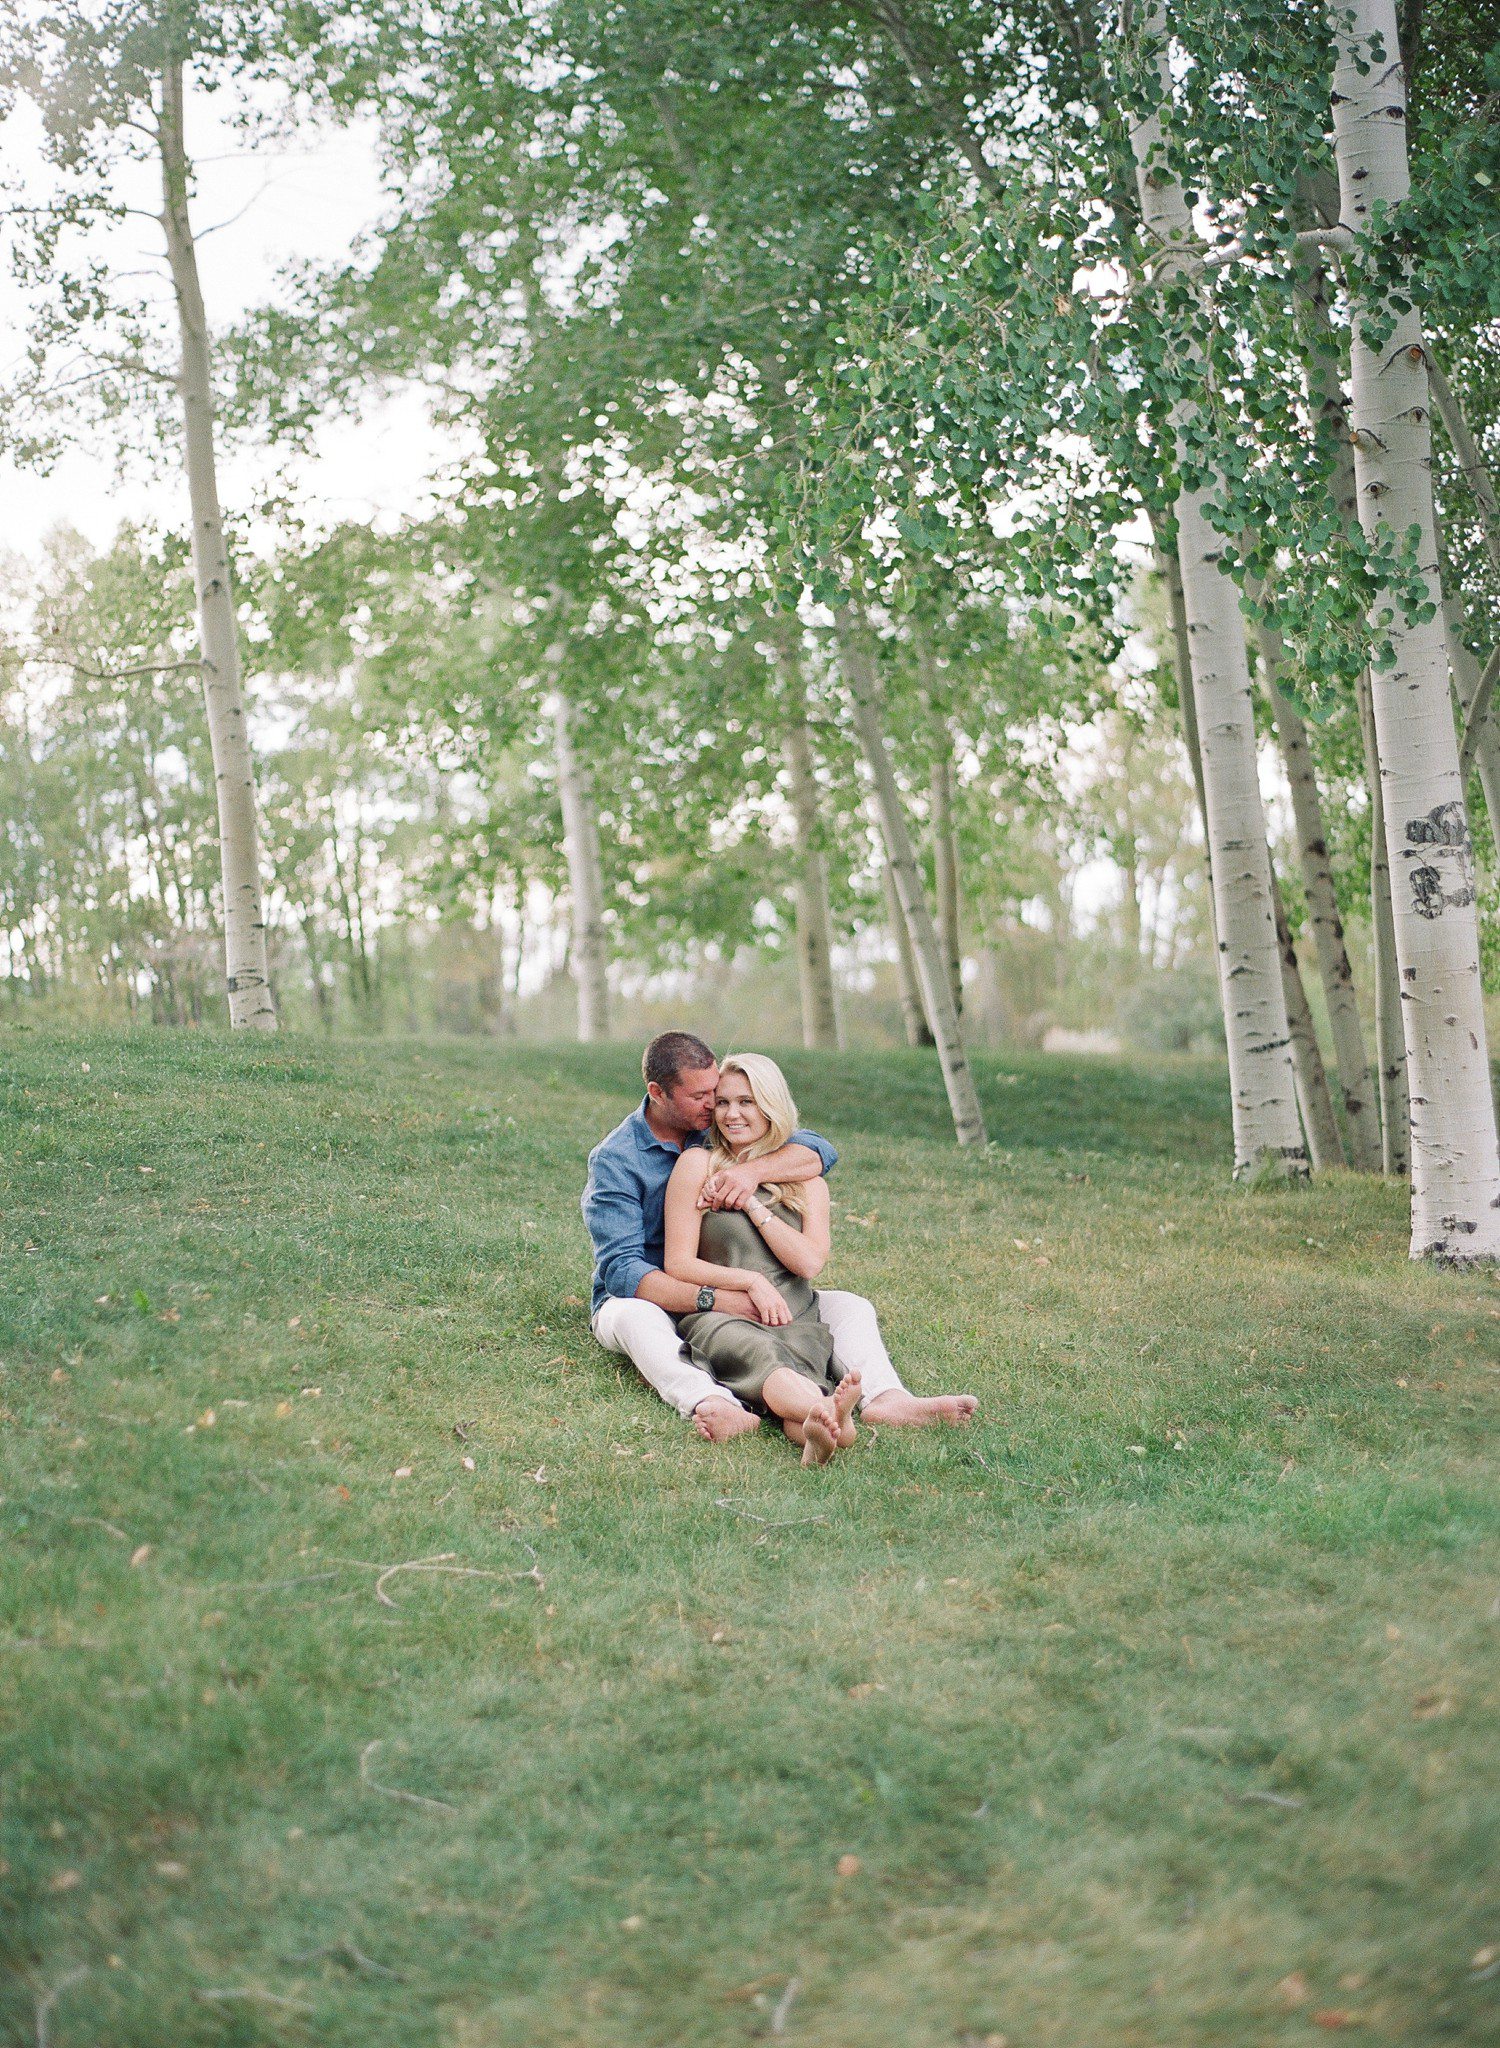 Summer Engagement Session in Aspen